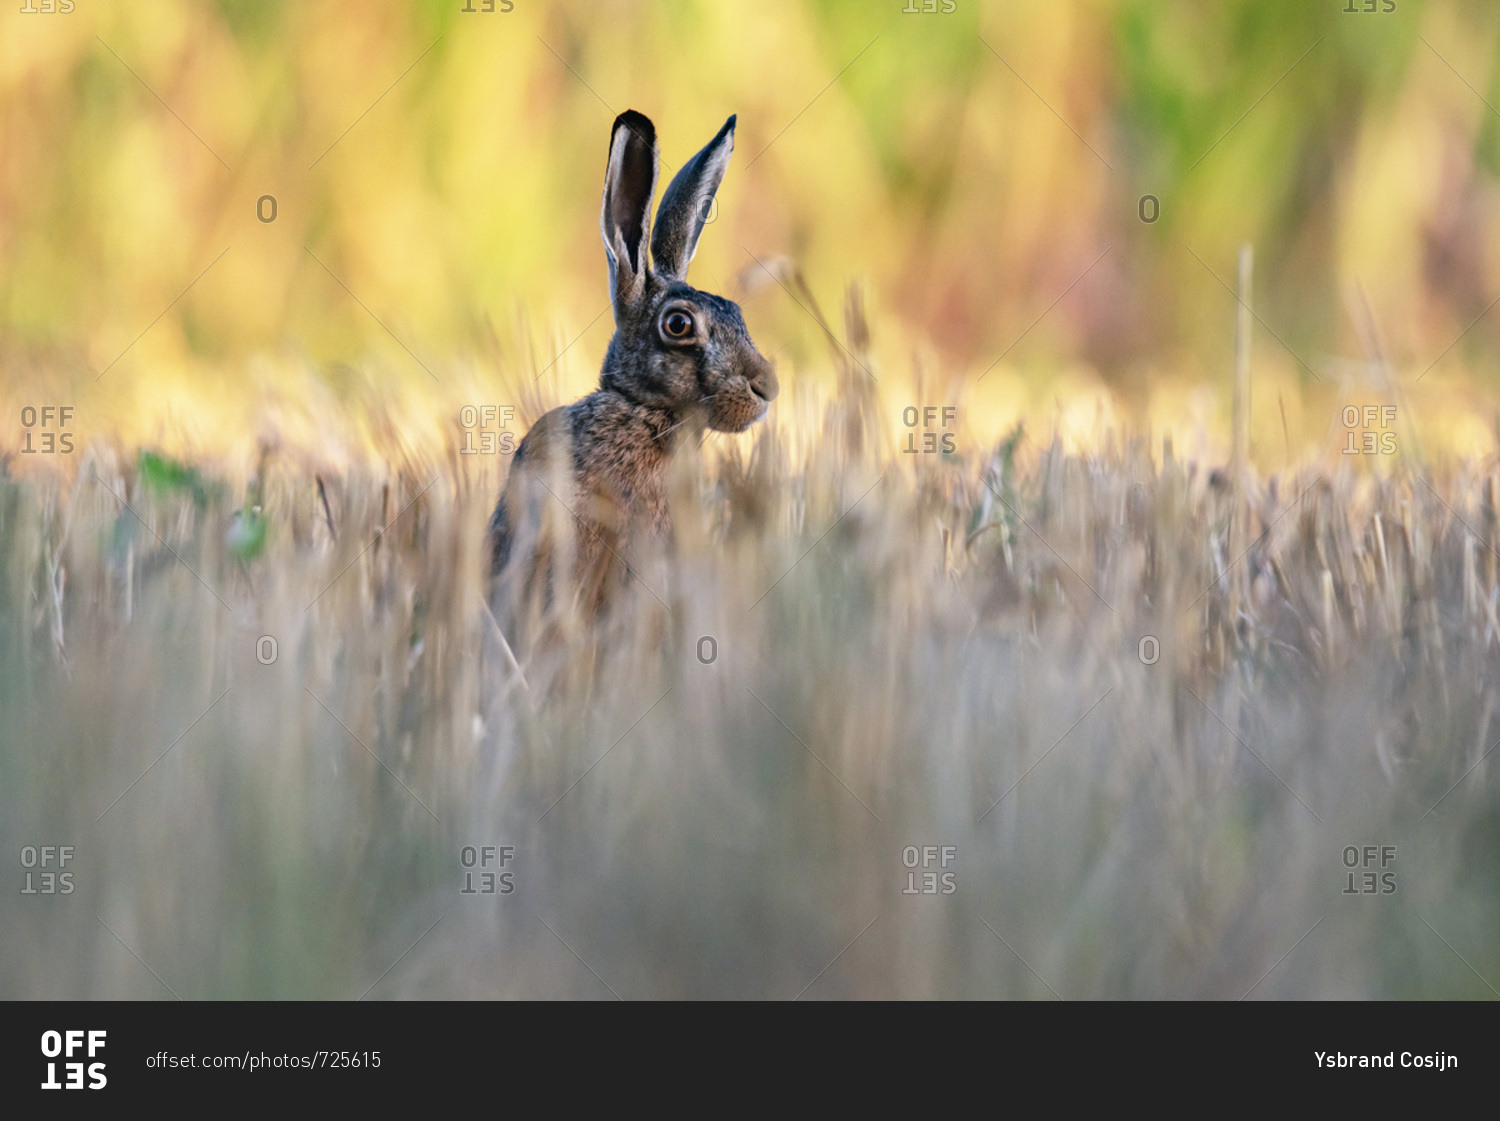 Alert rabbit in field with tall grass